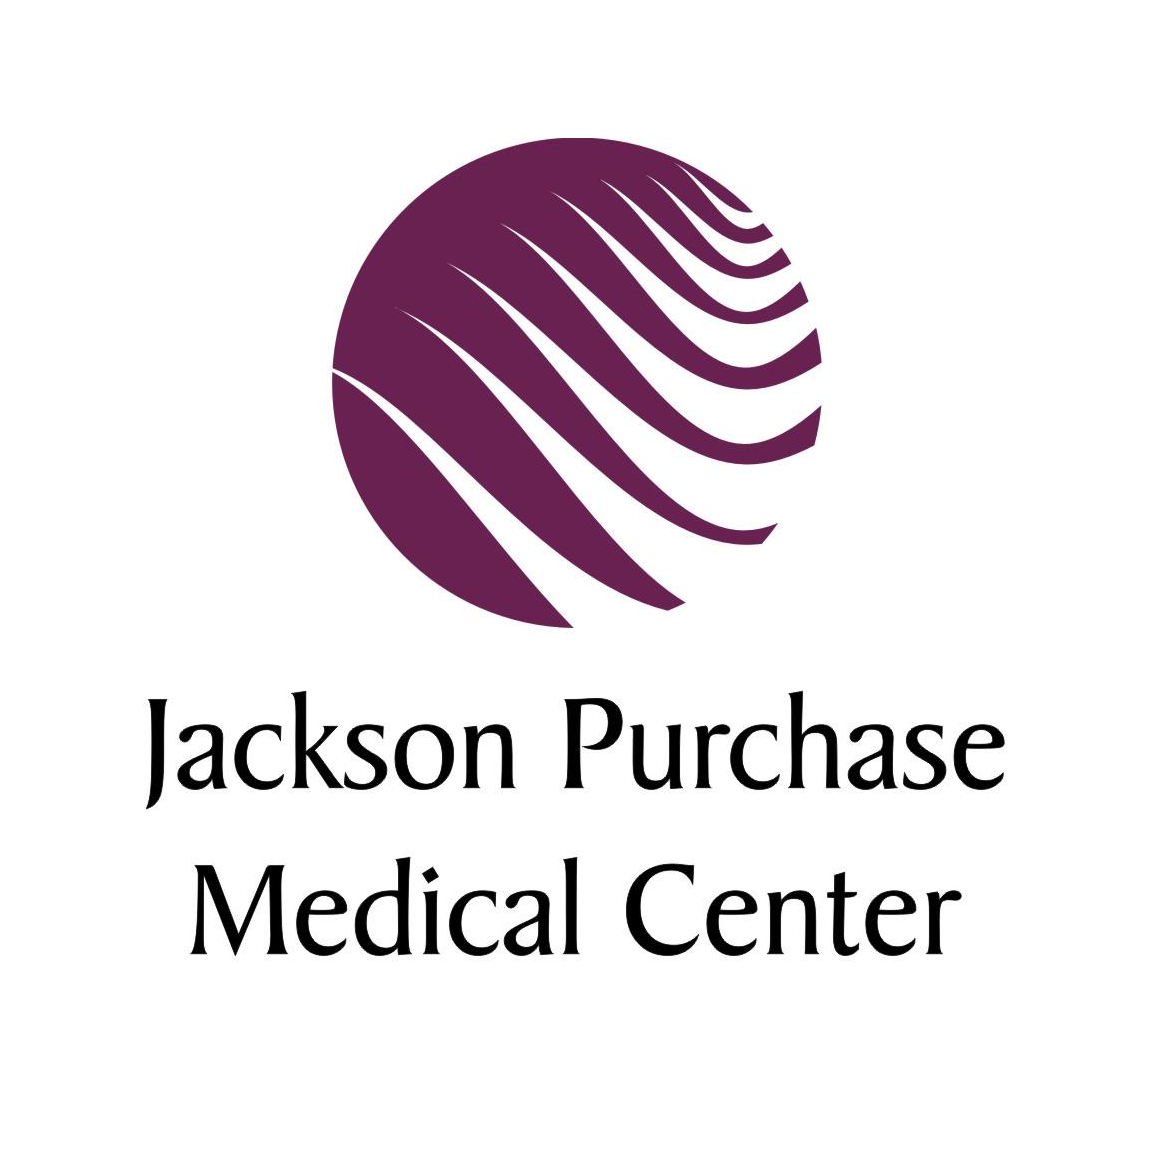 Jackson Purchase Medical Center